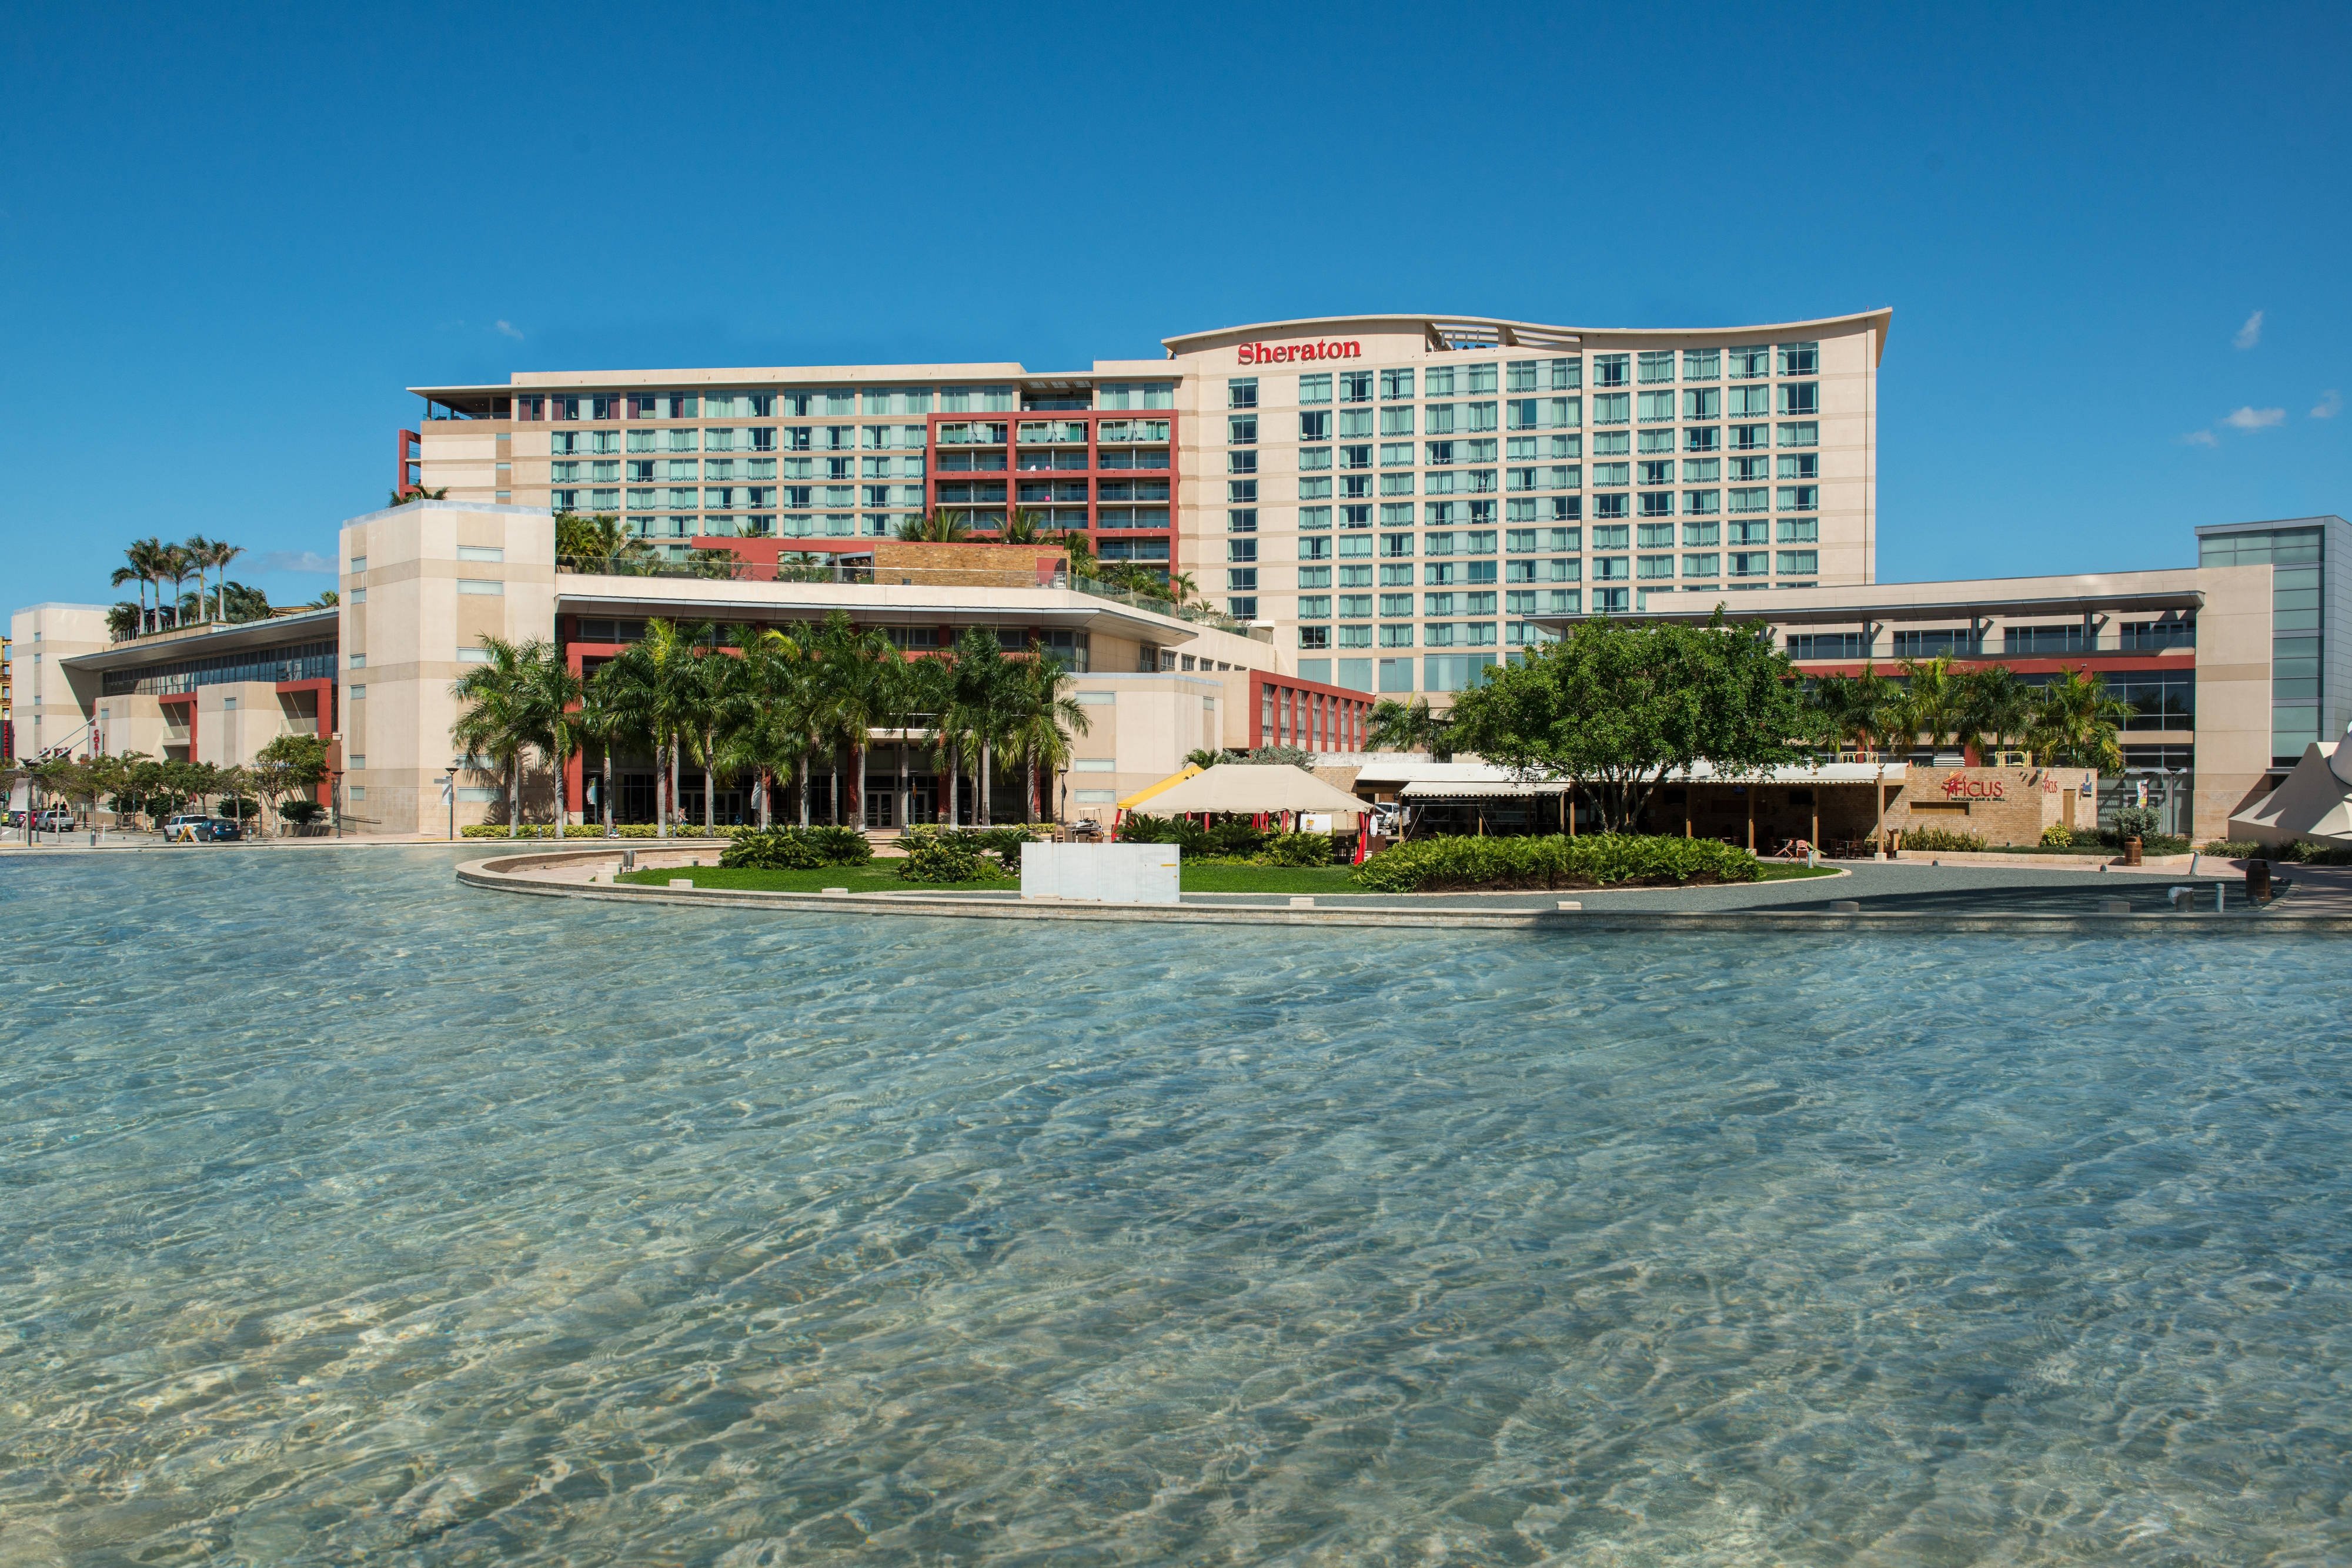 Sheraton Puerto Rico Hotel & Casino- San Juan, Puerto Rico Hotels